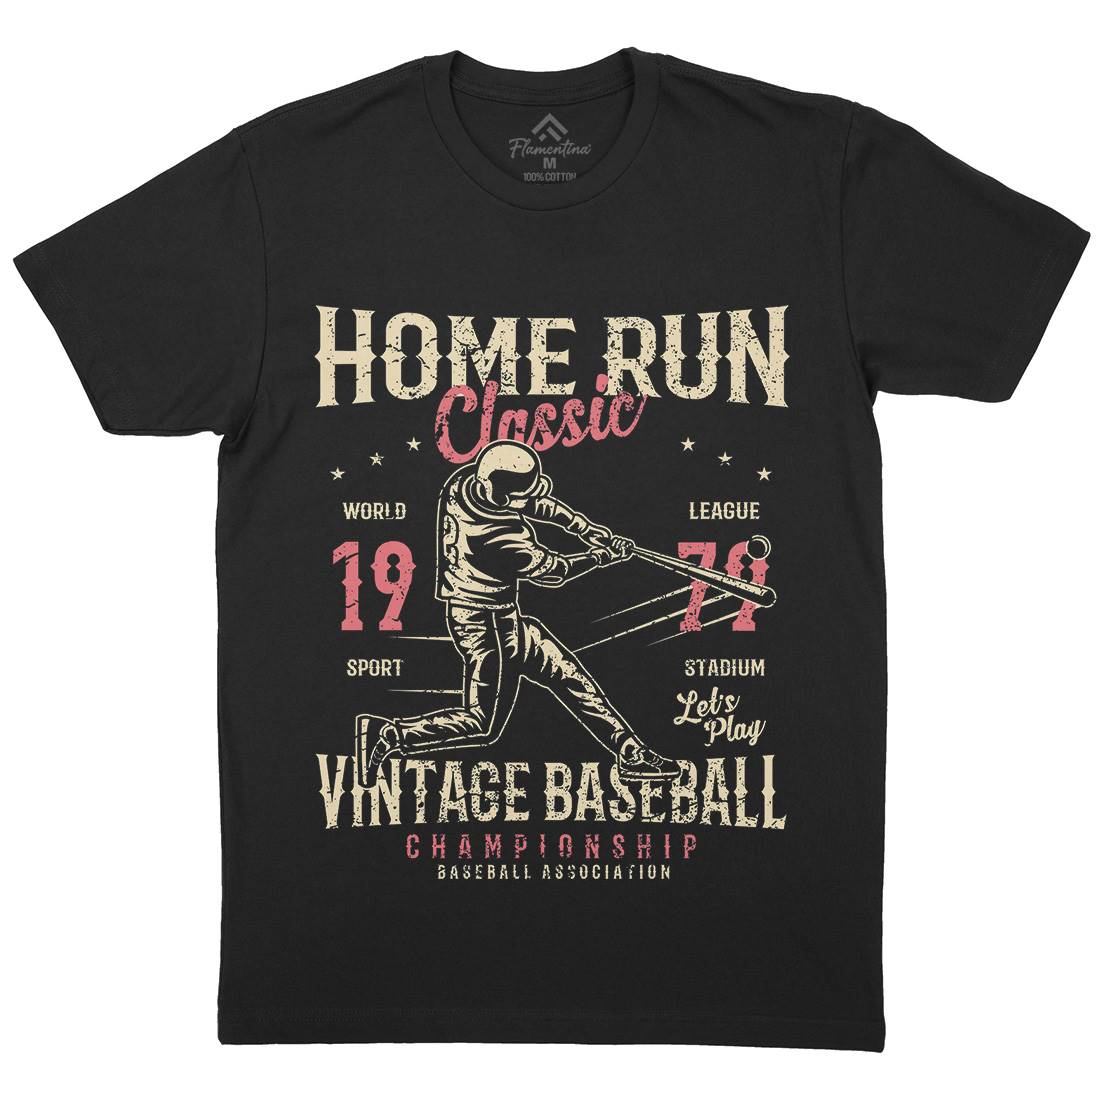 Home Run Classic Mens Organic Crew Neck T-Shirt Sport A065